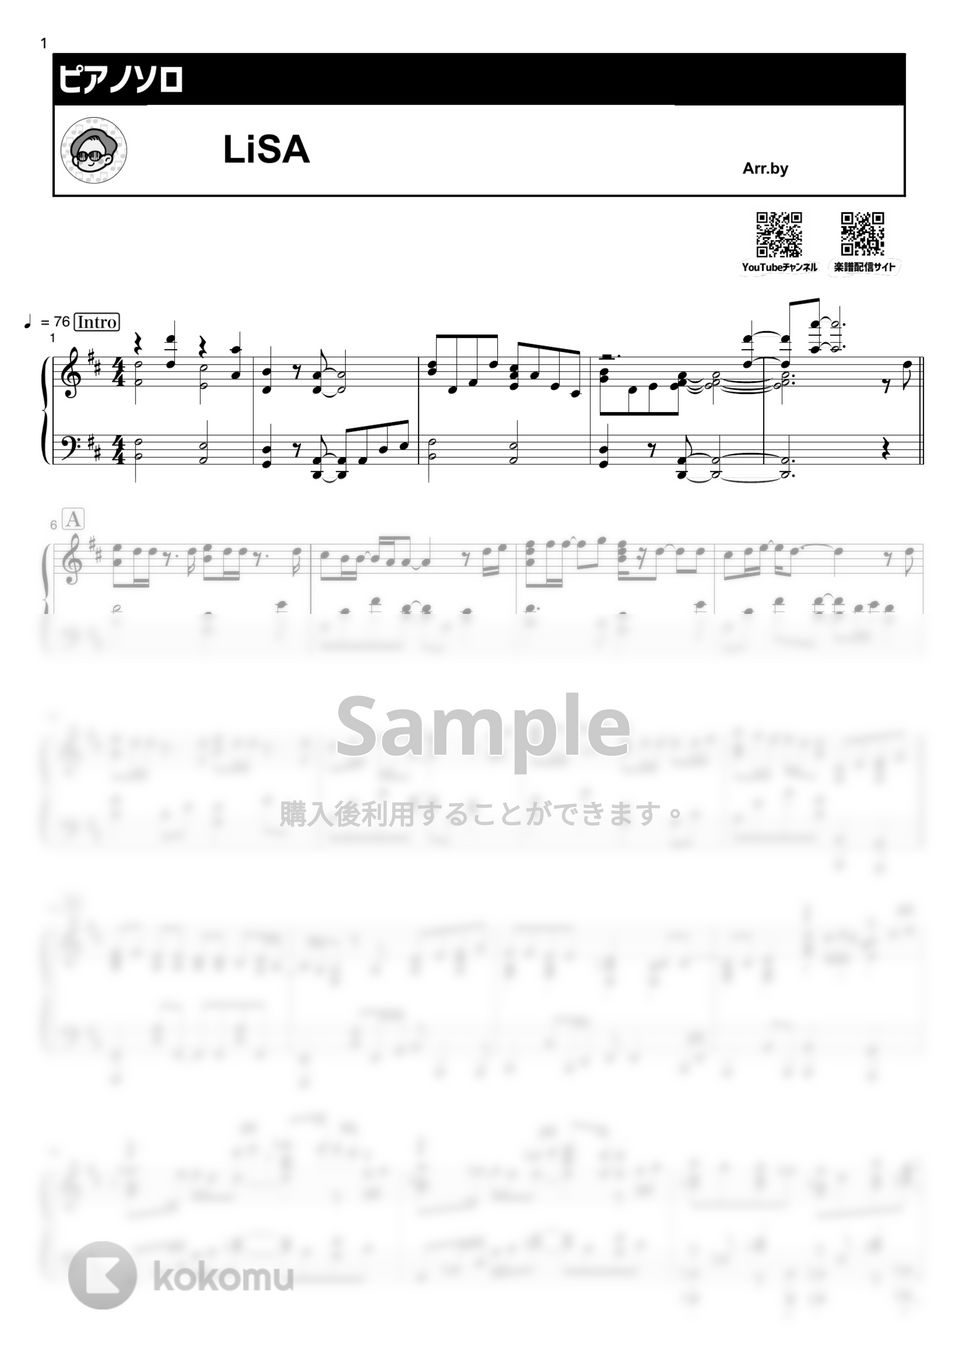 LiSA - 炎 (上級ver.) by シータピアノ